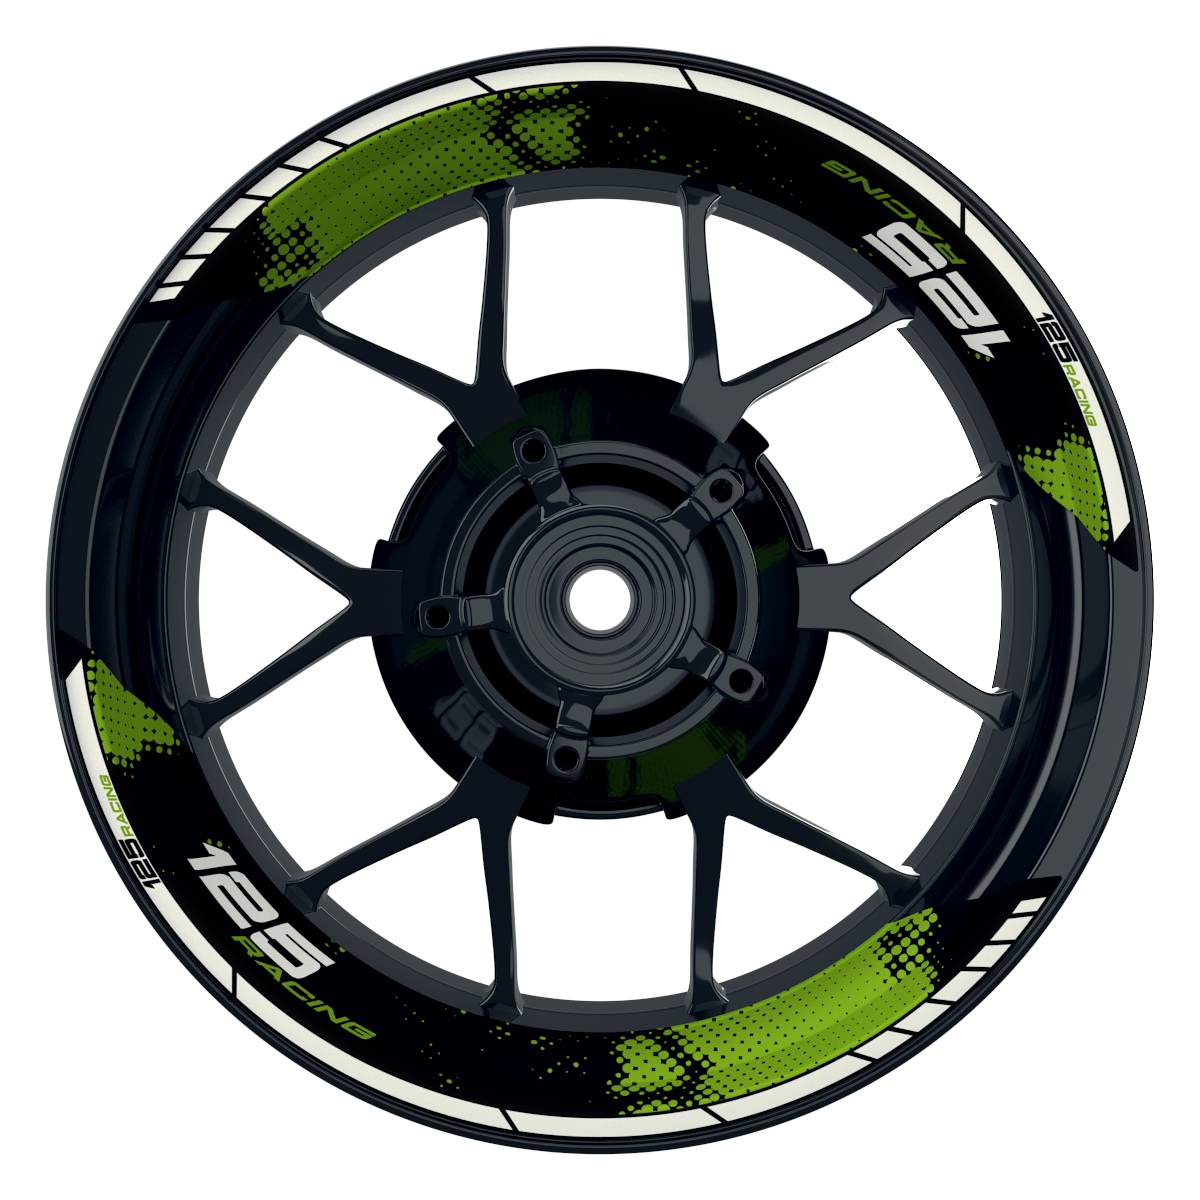 KTM Racing 125 Dots schwarz gruen Frontansicht